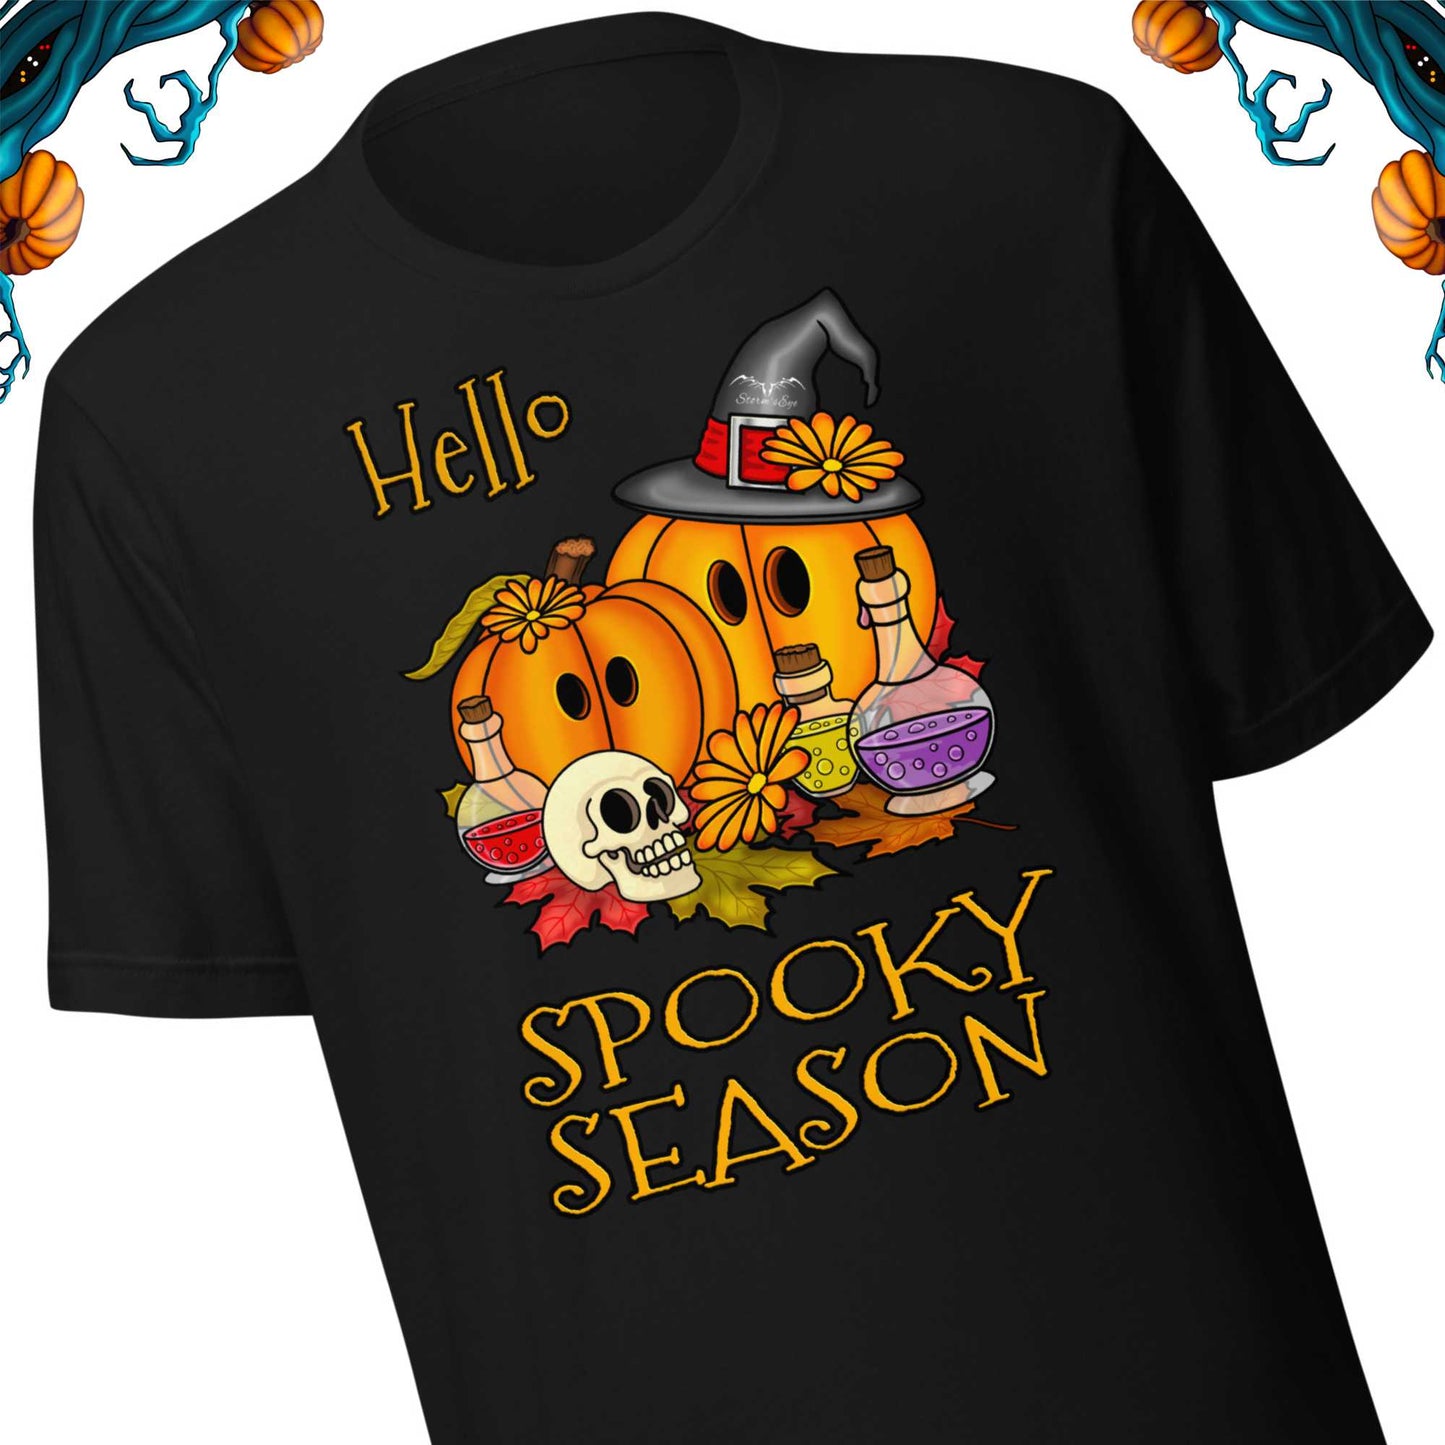 stormseye design hello spooky season halloween T shirt detail view black